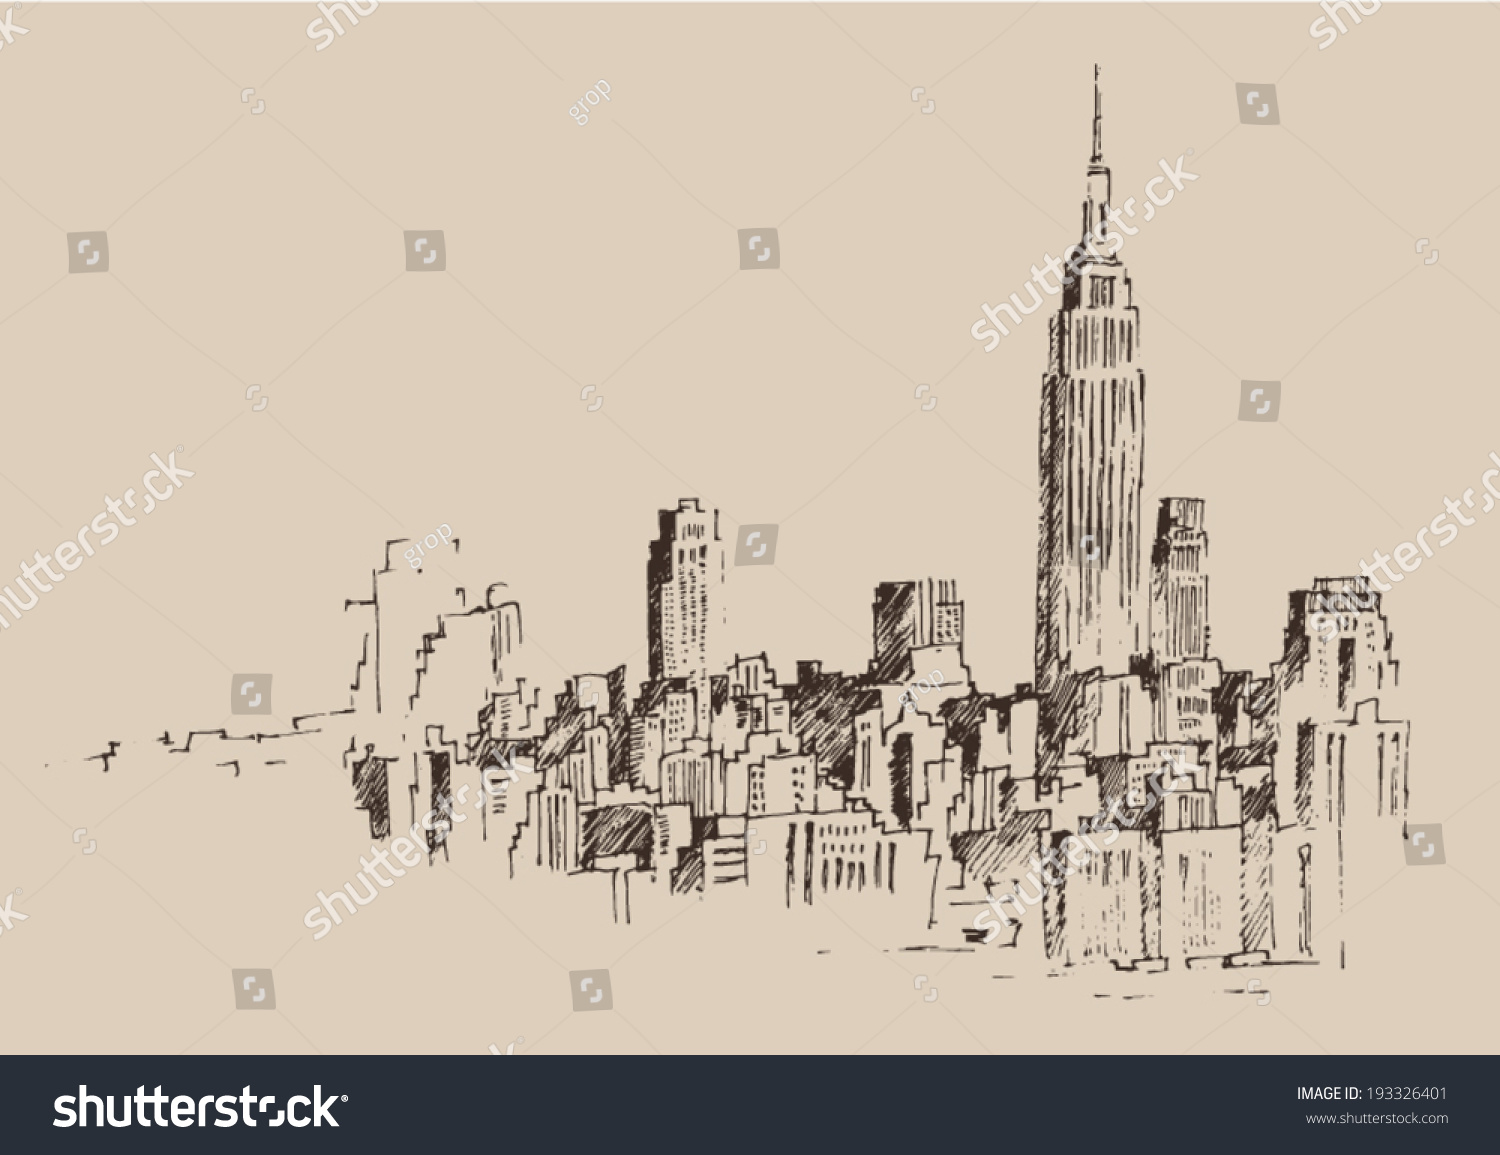 SVG of New York city engraving  vector illustration, hand drawn svg